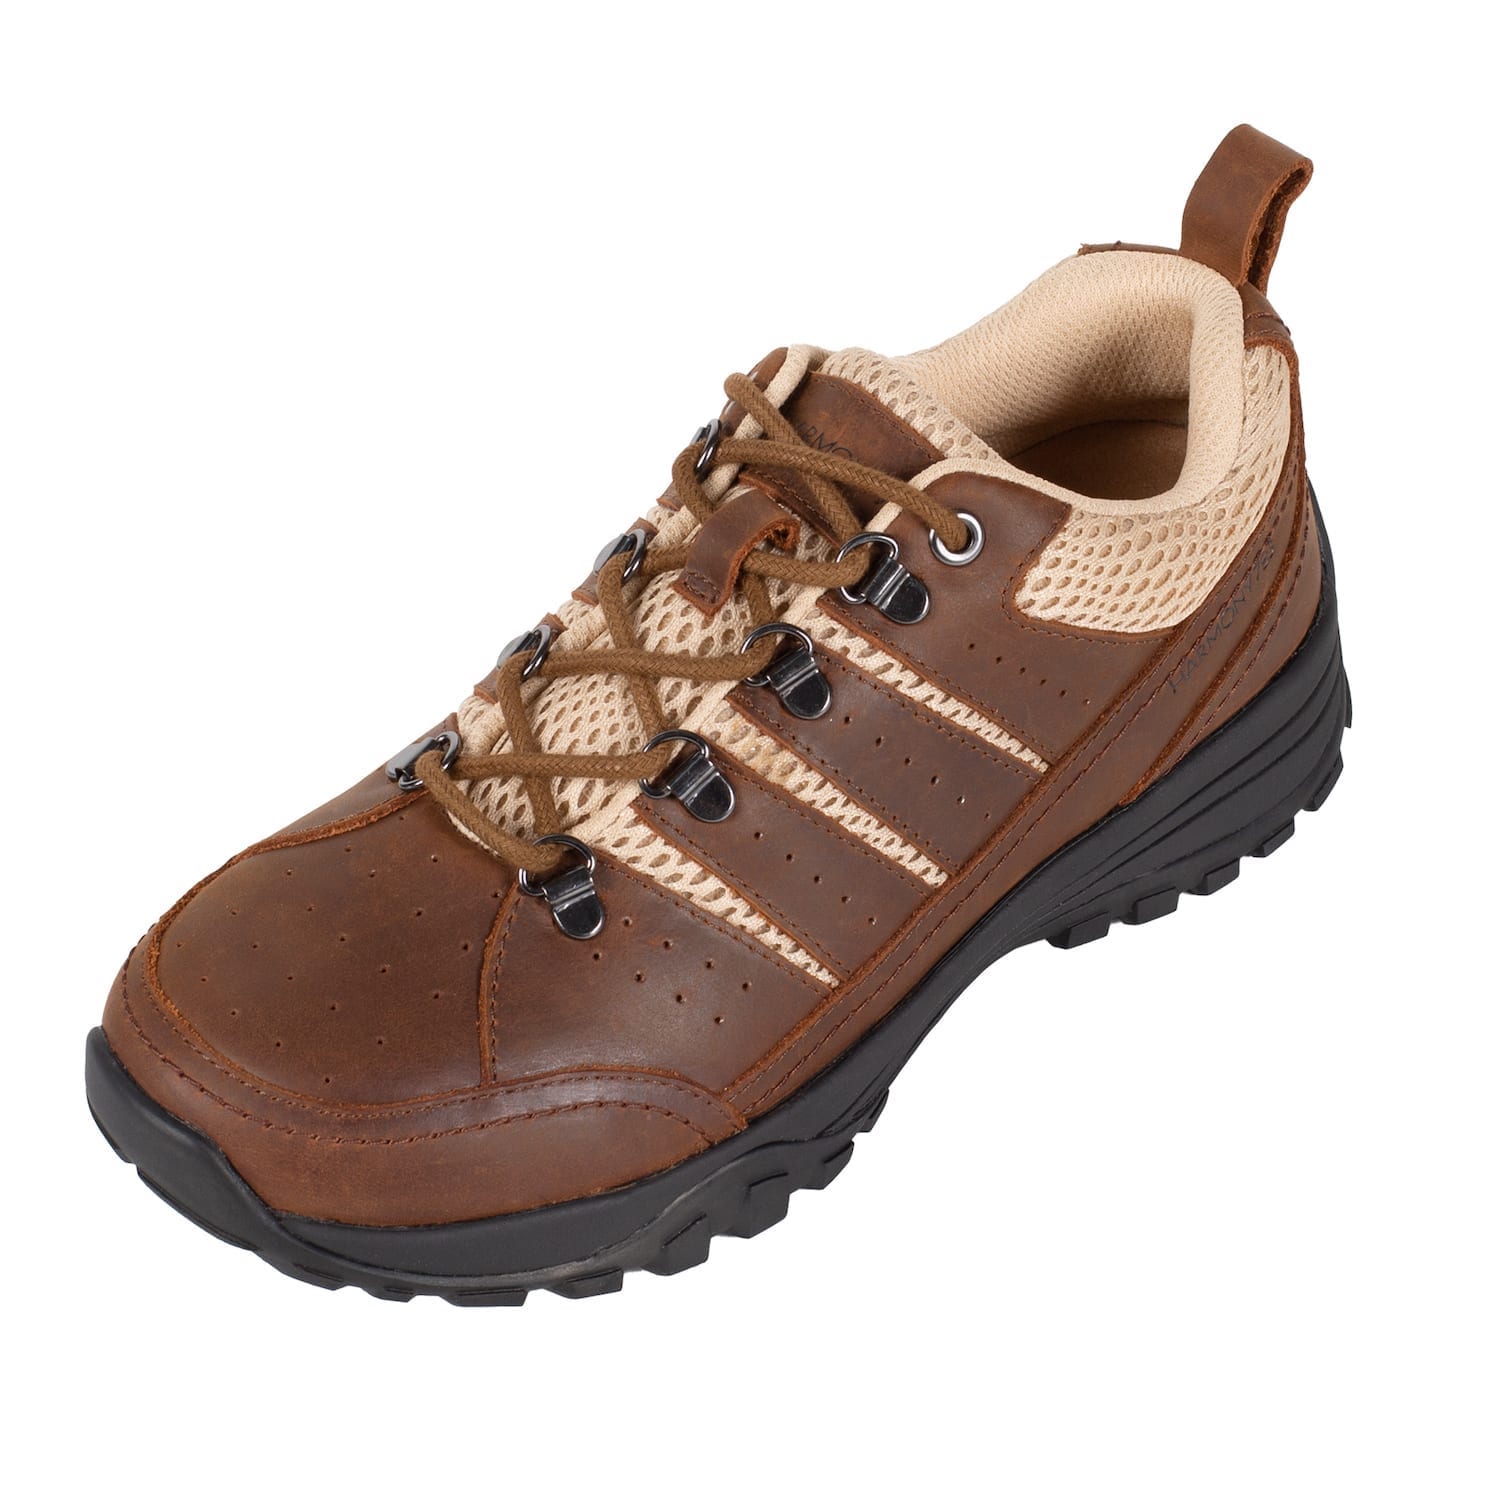 Trail Shoe • Bailey Brown Leather & Crème Mesh